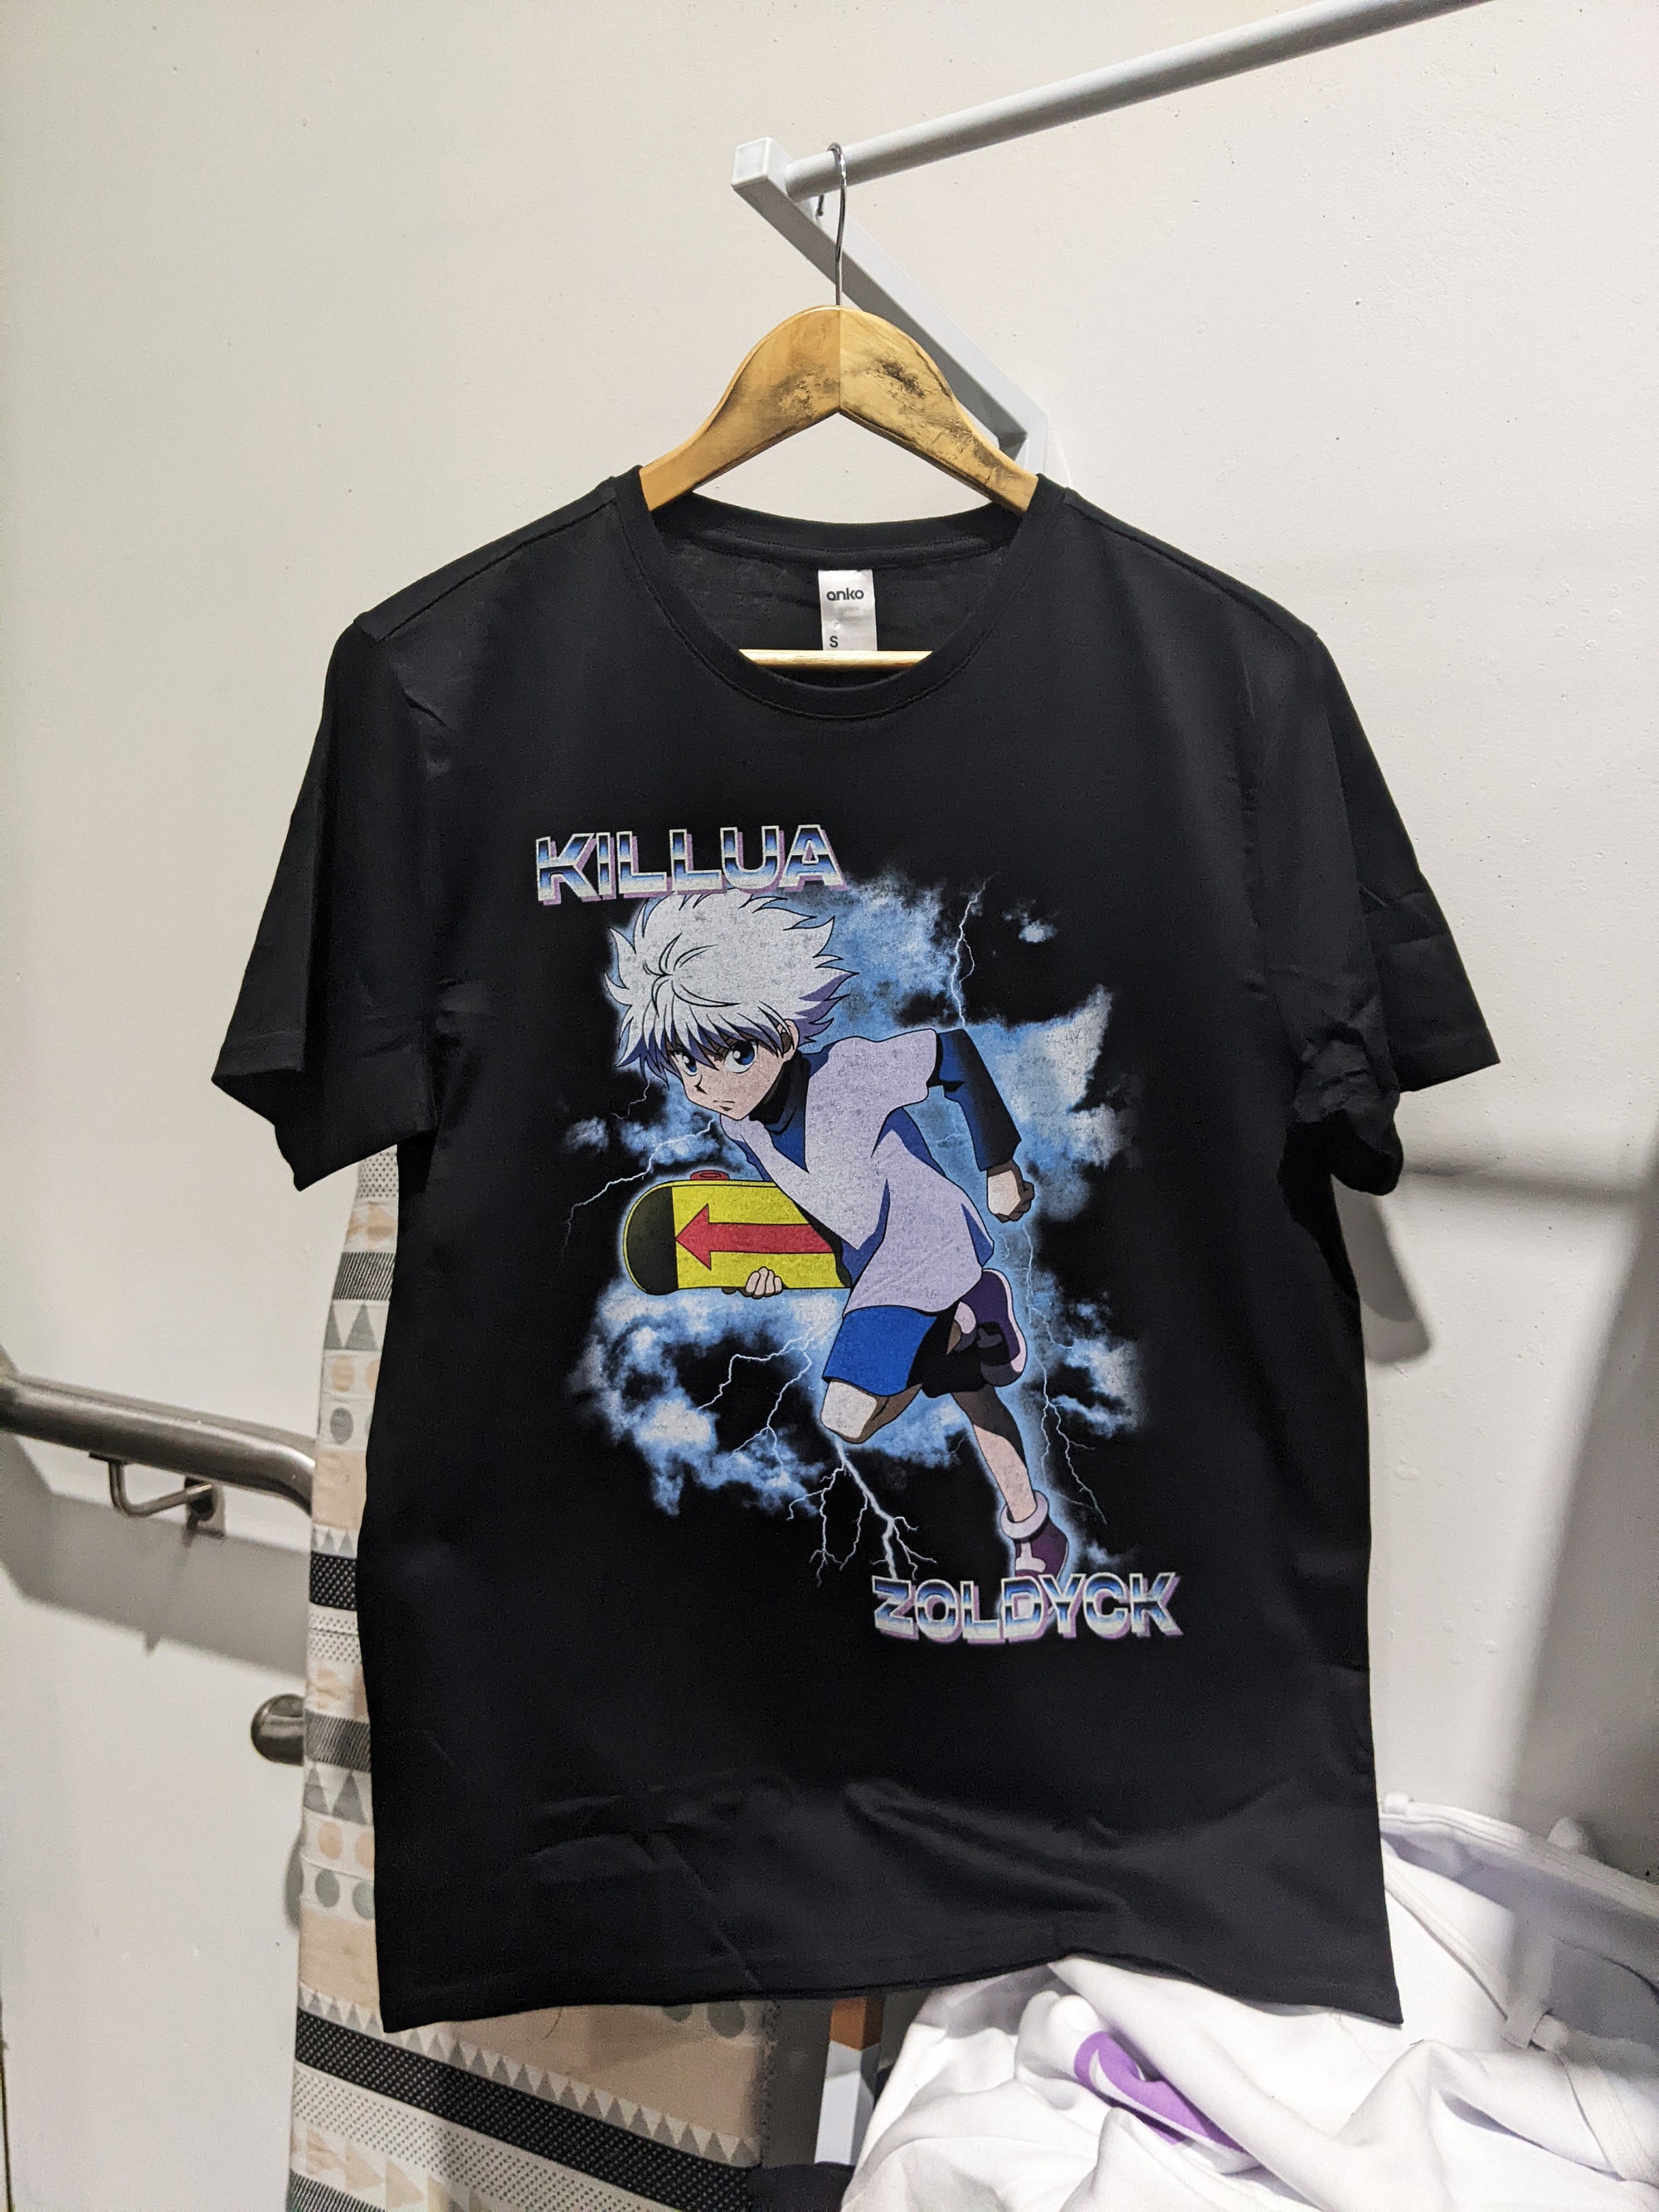 Discover Zoldyck Killua  Anime Vintage Style T-Shirt!